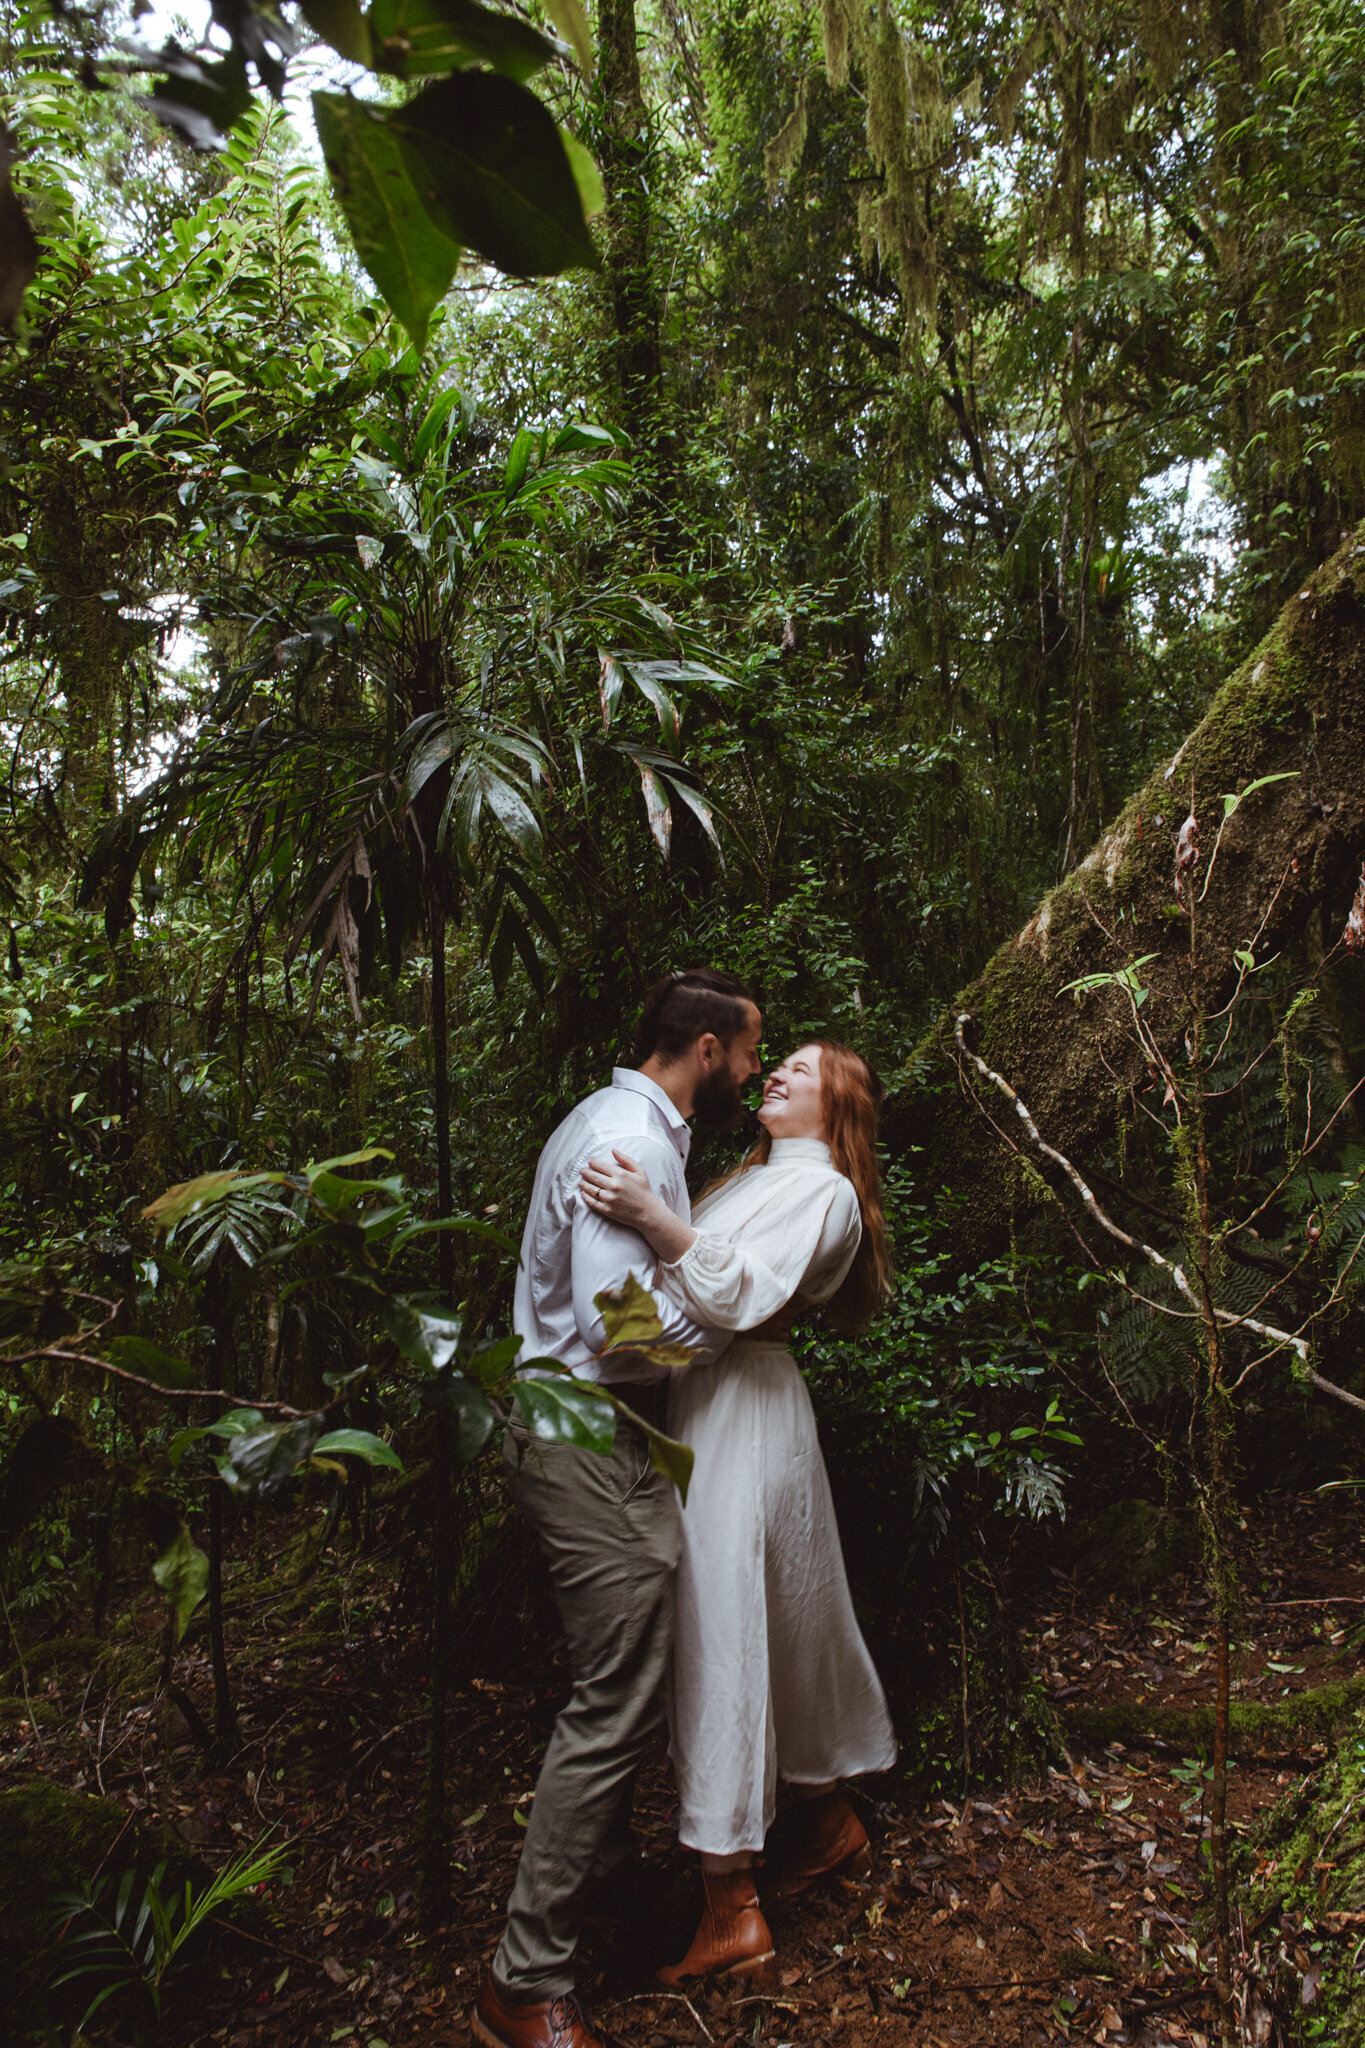 forest escape couples photoshoot wedding engagement greenery